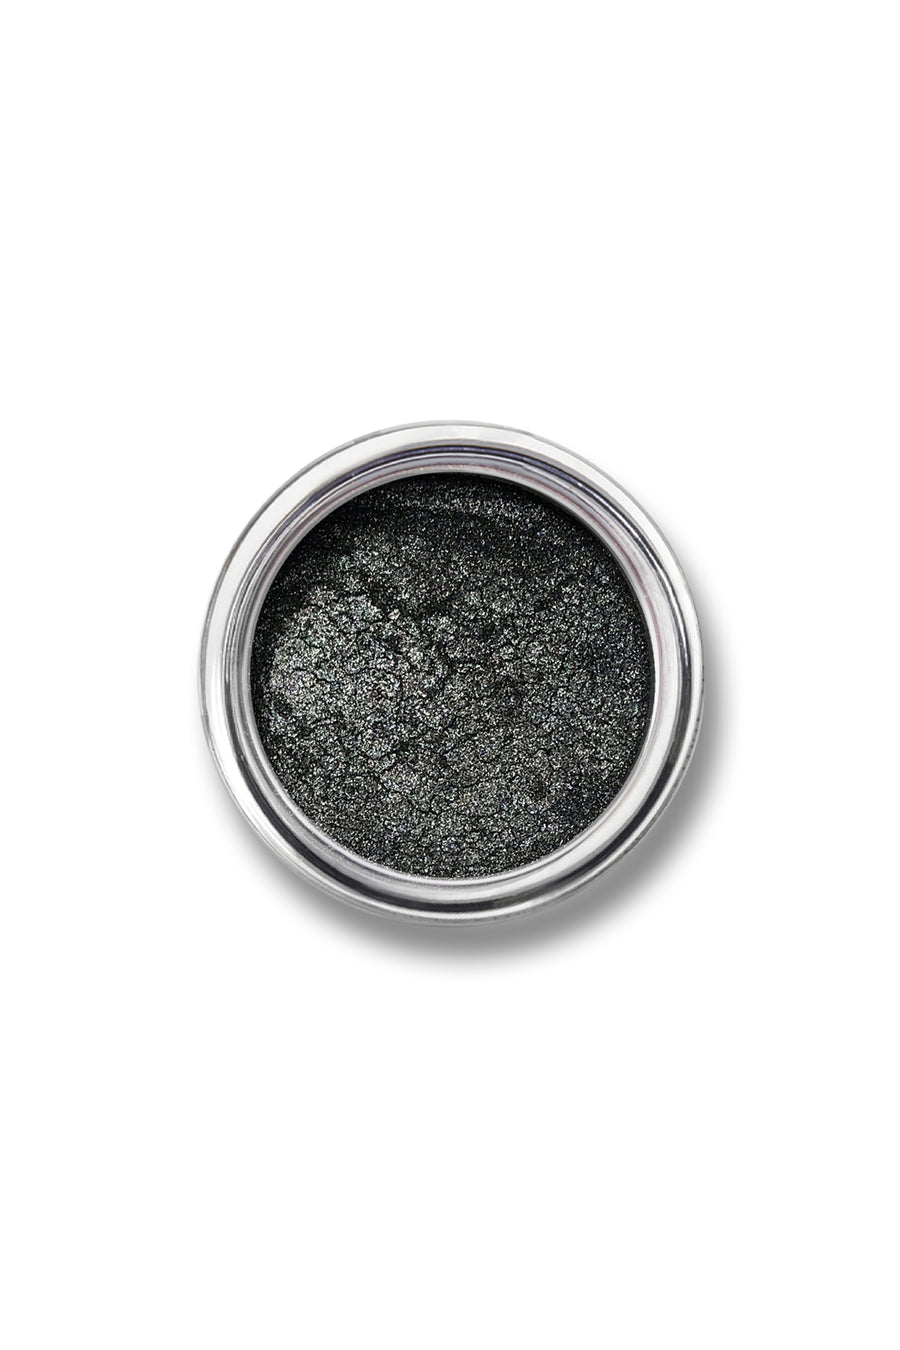 Shimmer Eyeshadow #4 - Deep Silver - Blend Mineral Cosmetics